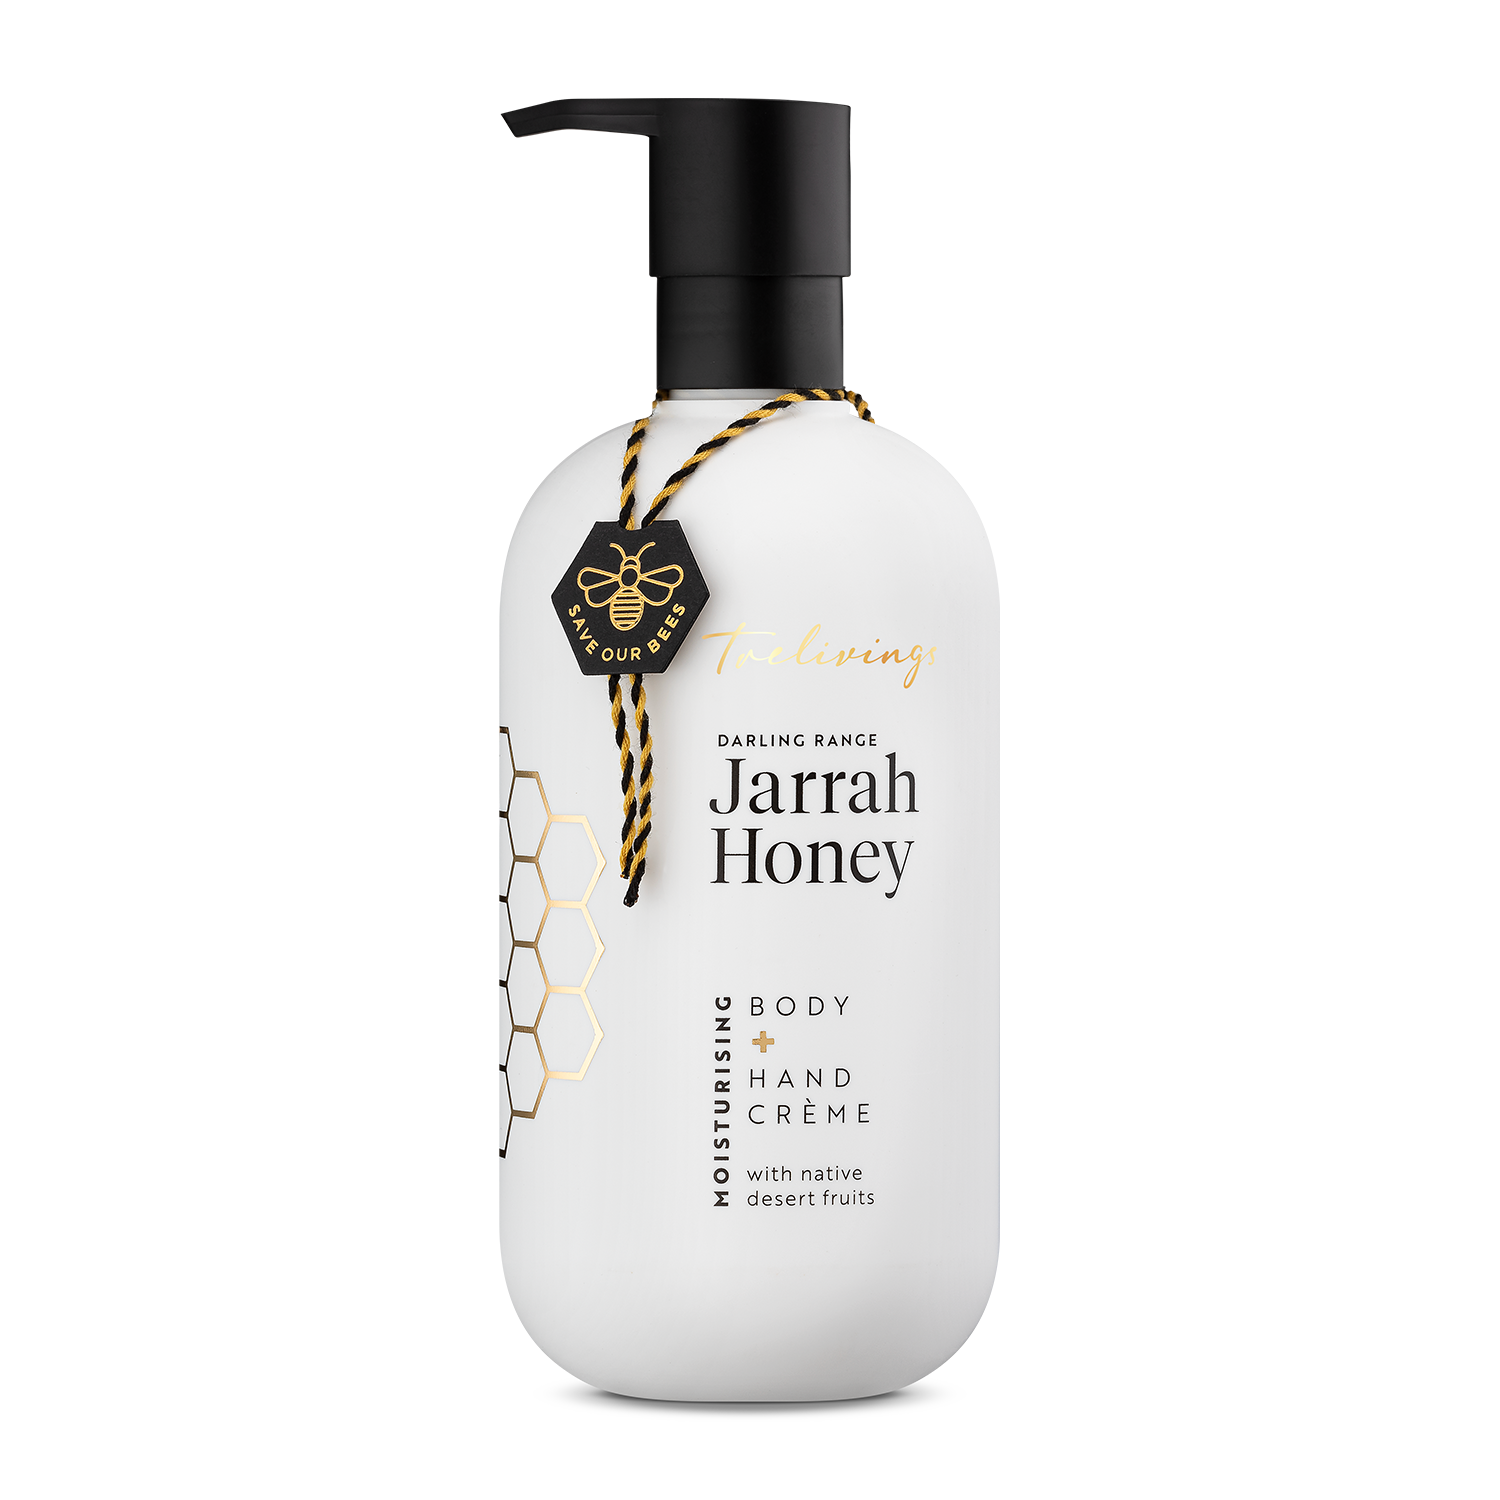 Darling Range - Jarrah Honey - Moisturising Body & Hand Crème / Lotion / Cream 500ml